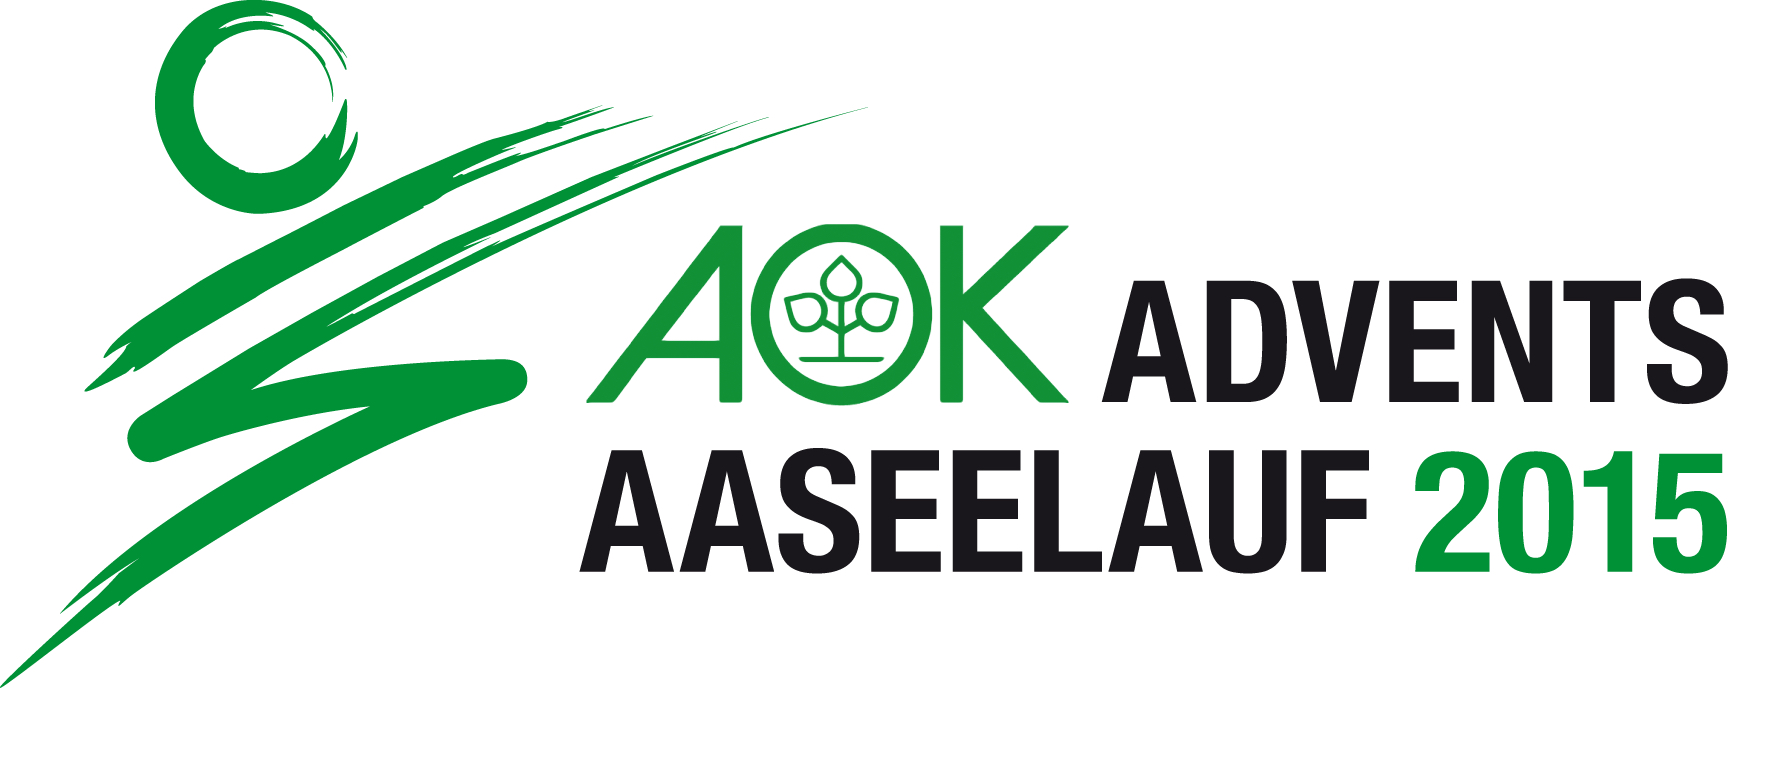 Anmeldung zum 26. AOK Advents Aaseelauf 